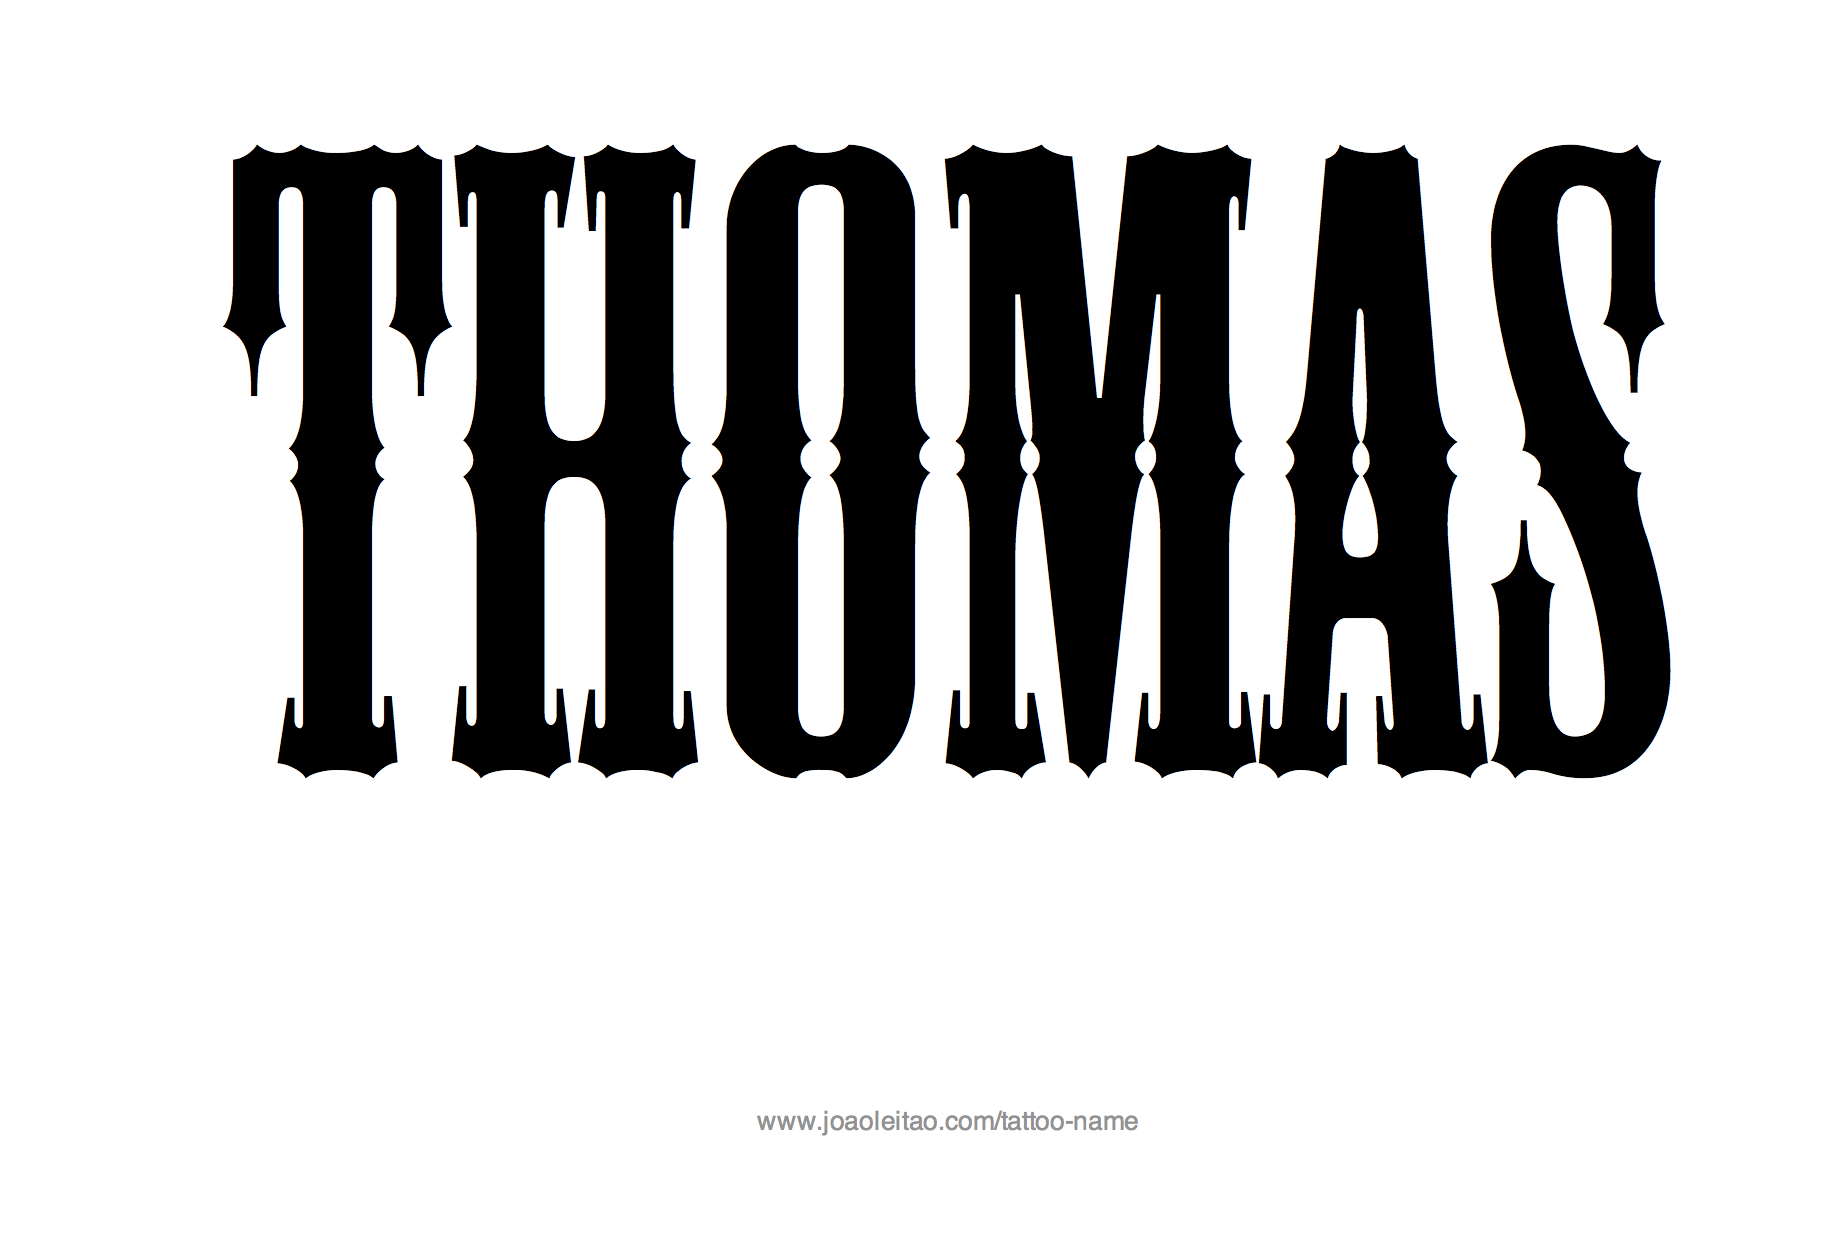 6. Thomas the Train Tattoo with Name - wide 7